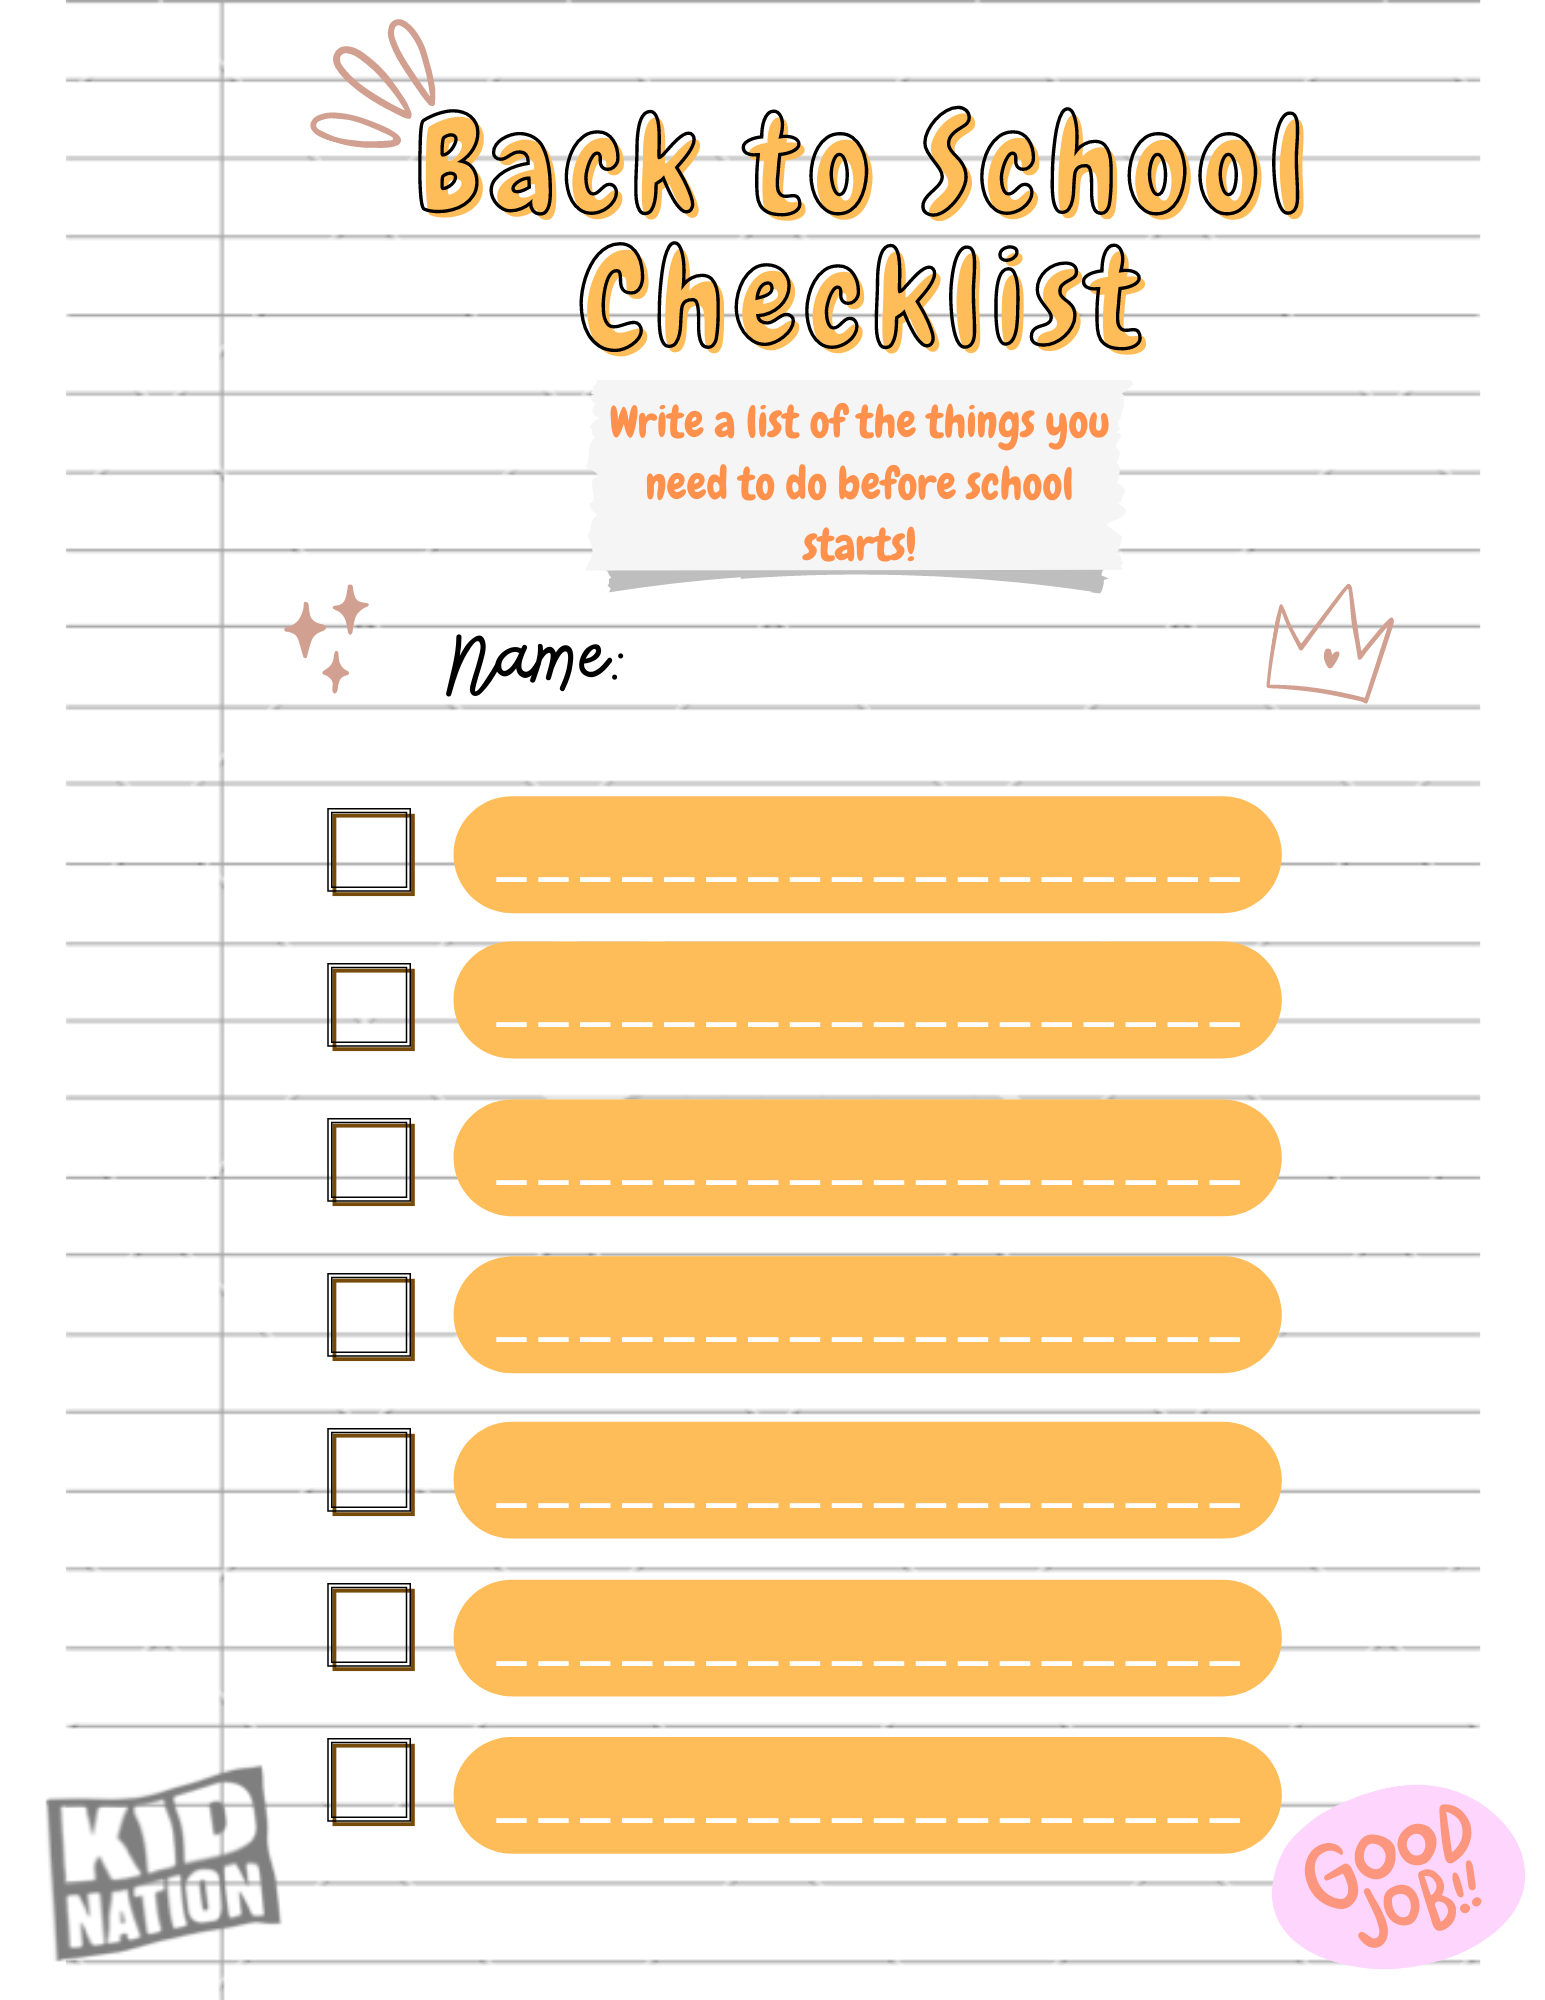 Back to School Checklist Worksheet